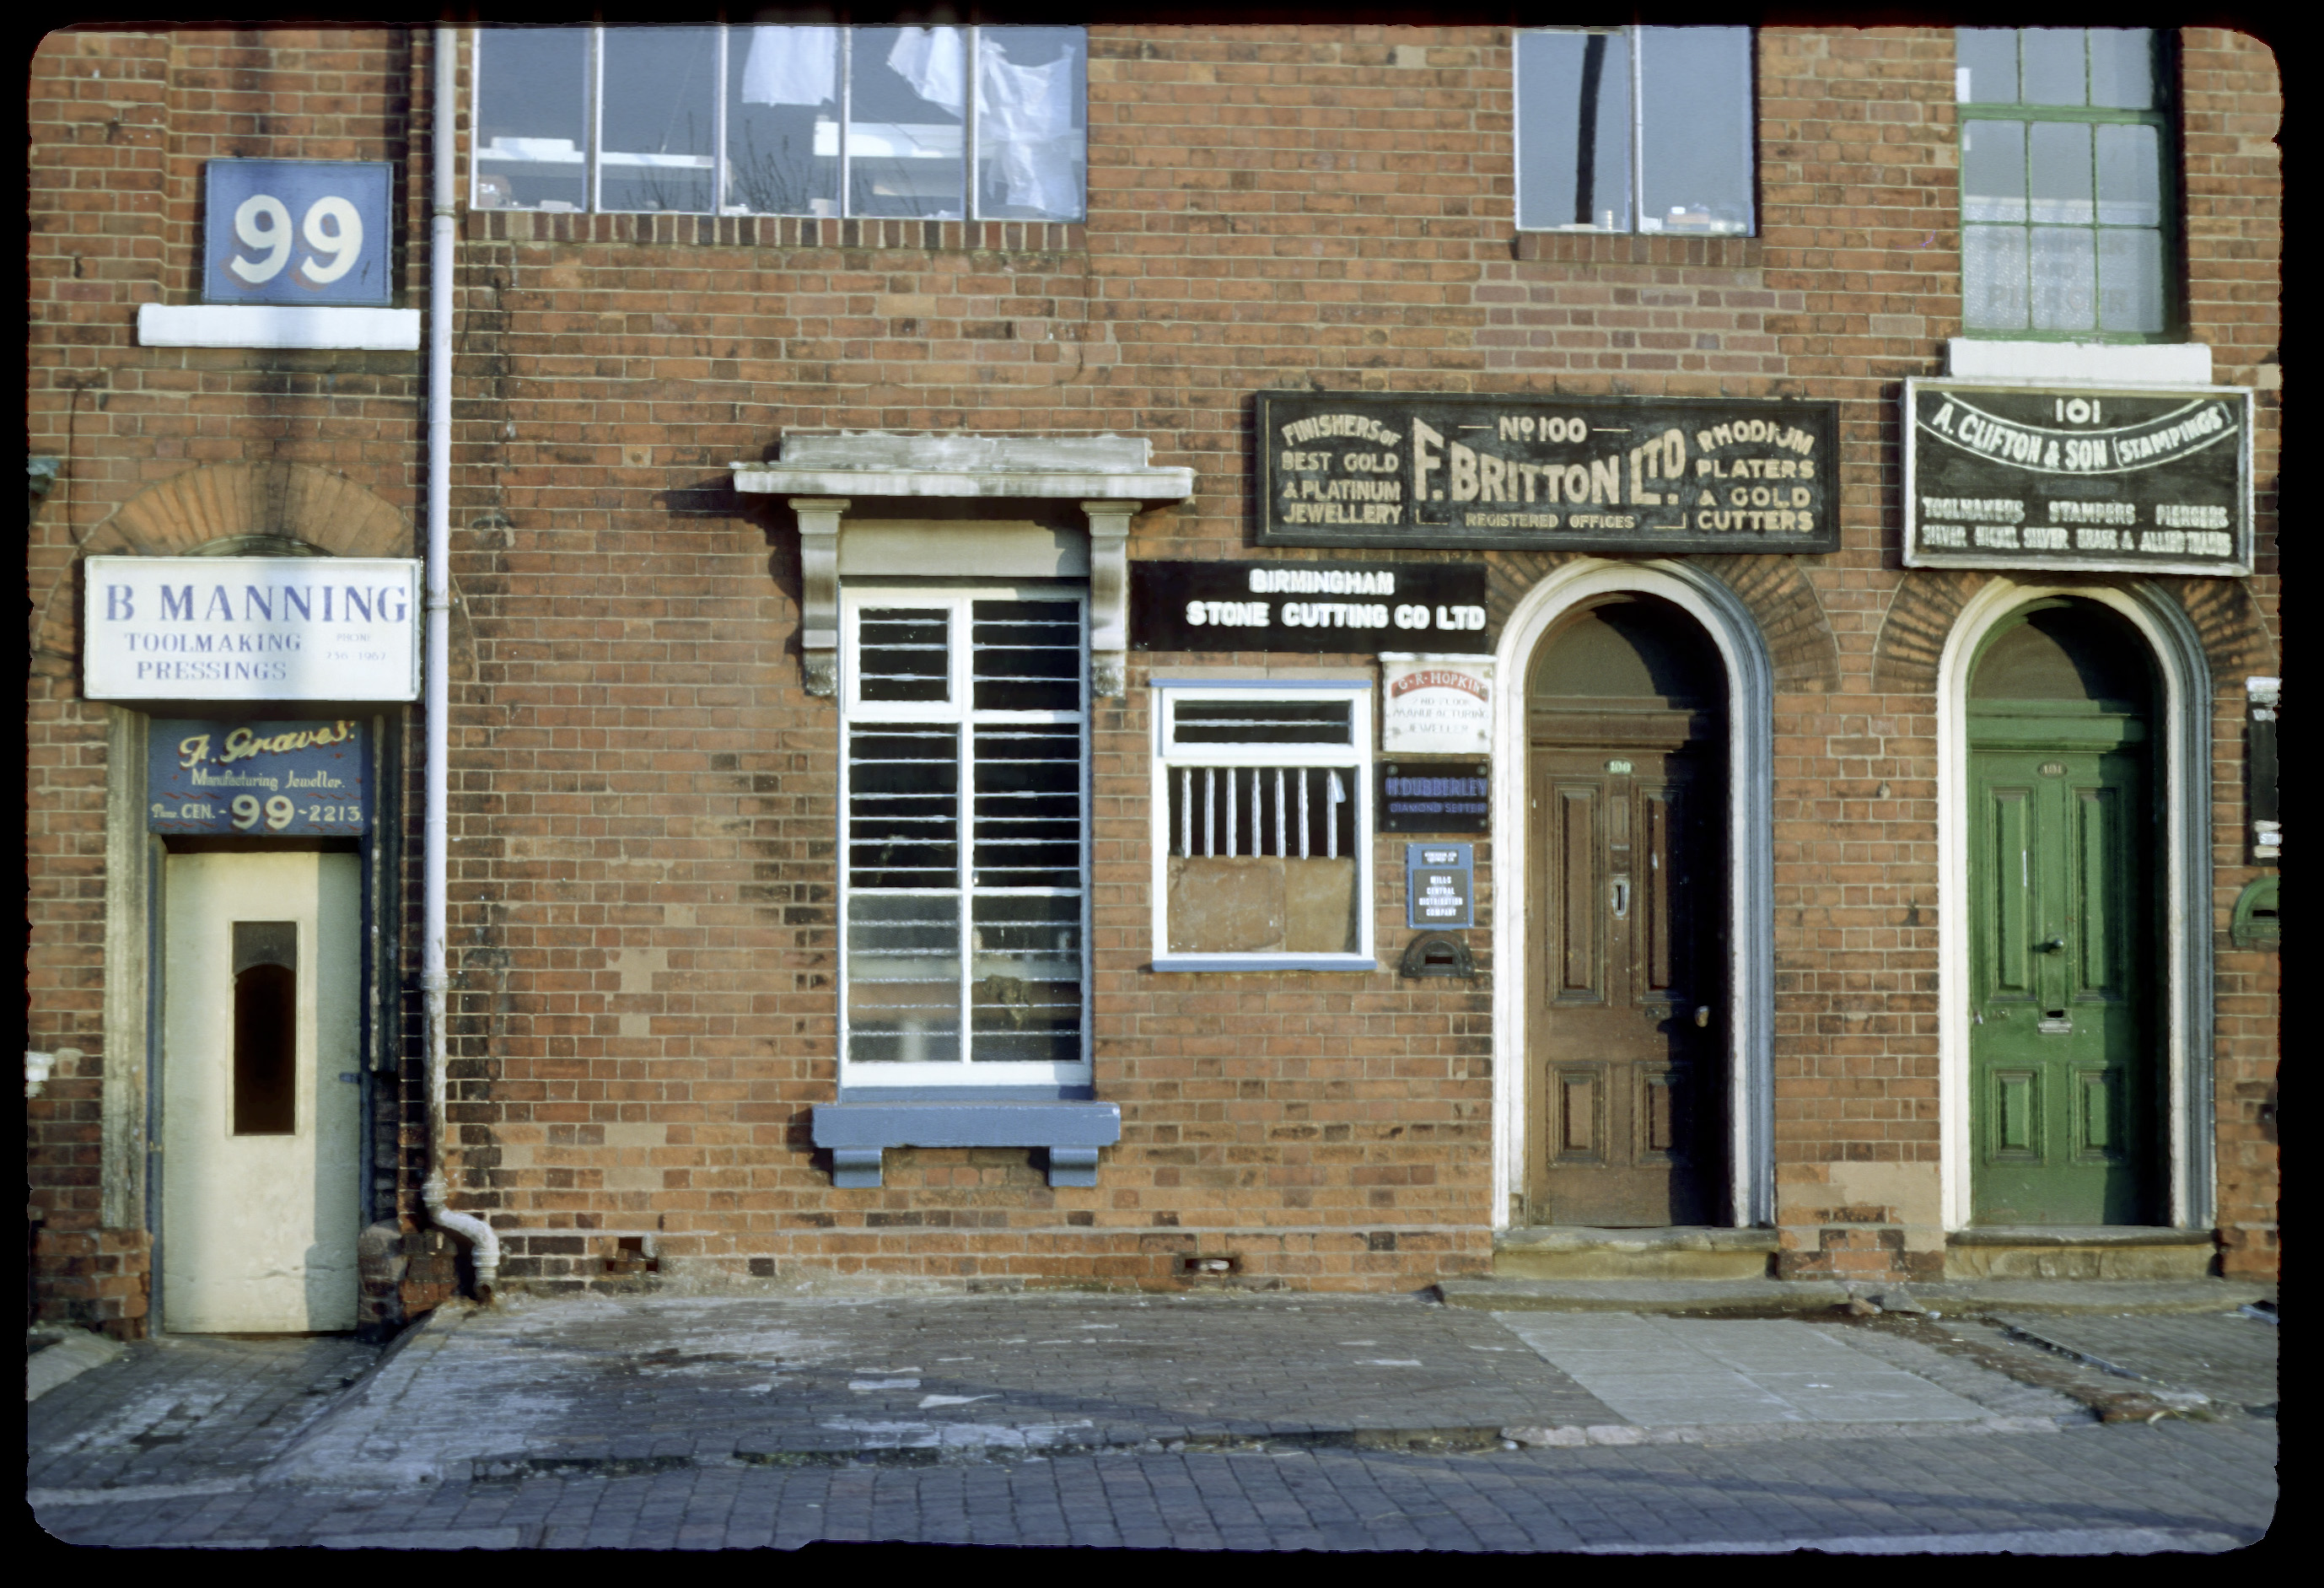 Typical workshops, Vyse Street, Jewellery Quarter, Birmingham - ePapers